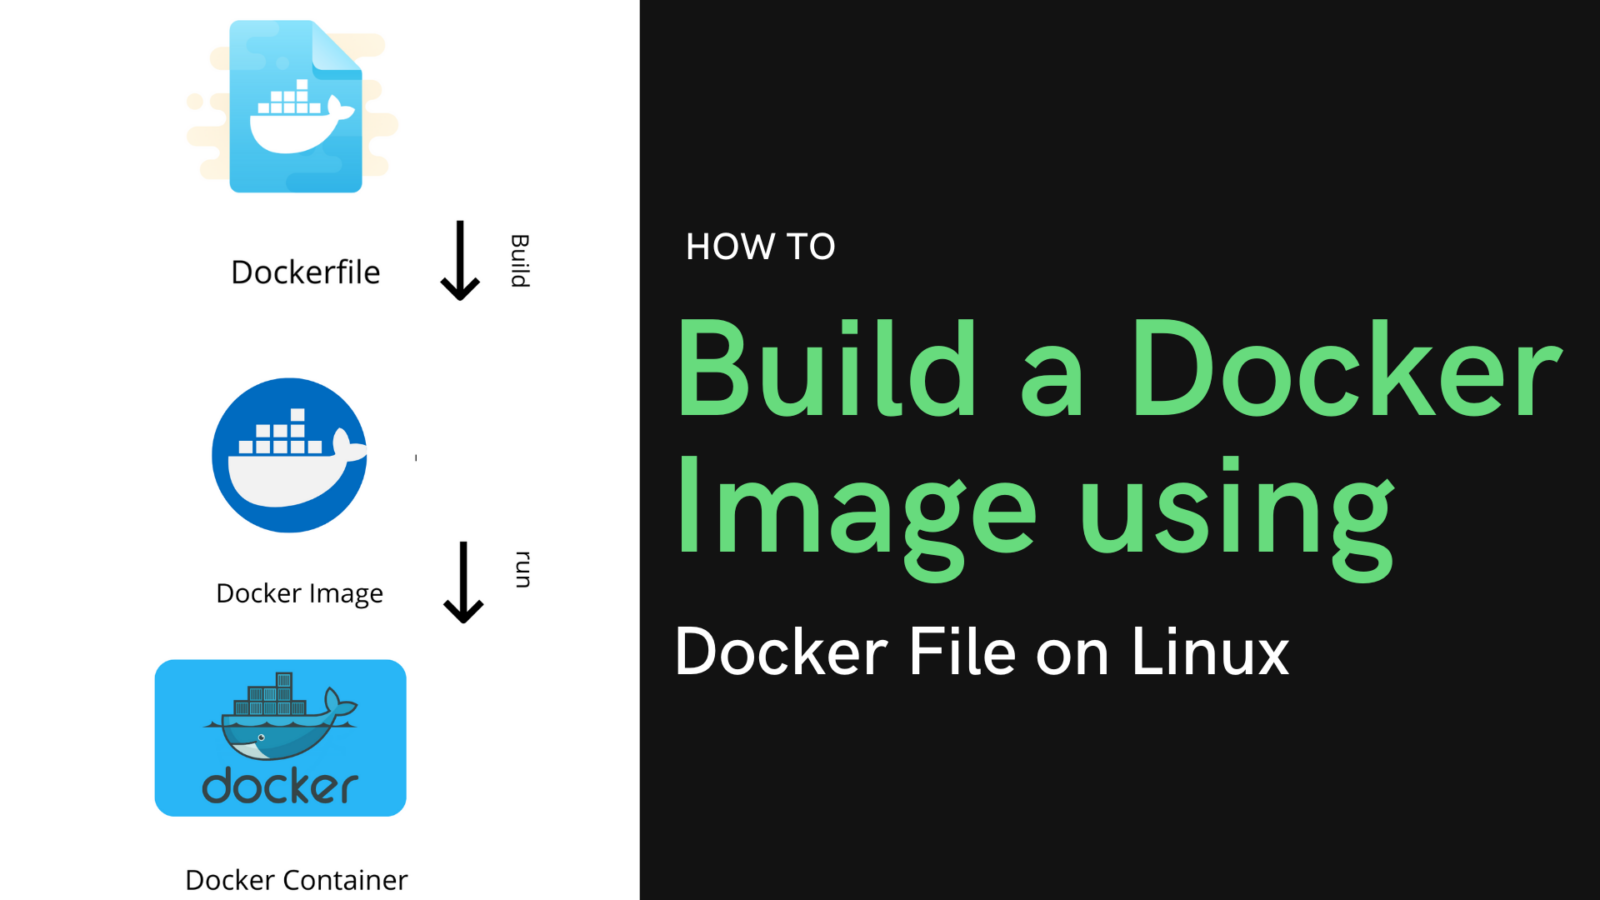 Build a Docker Image using